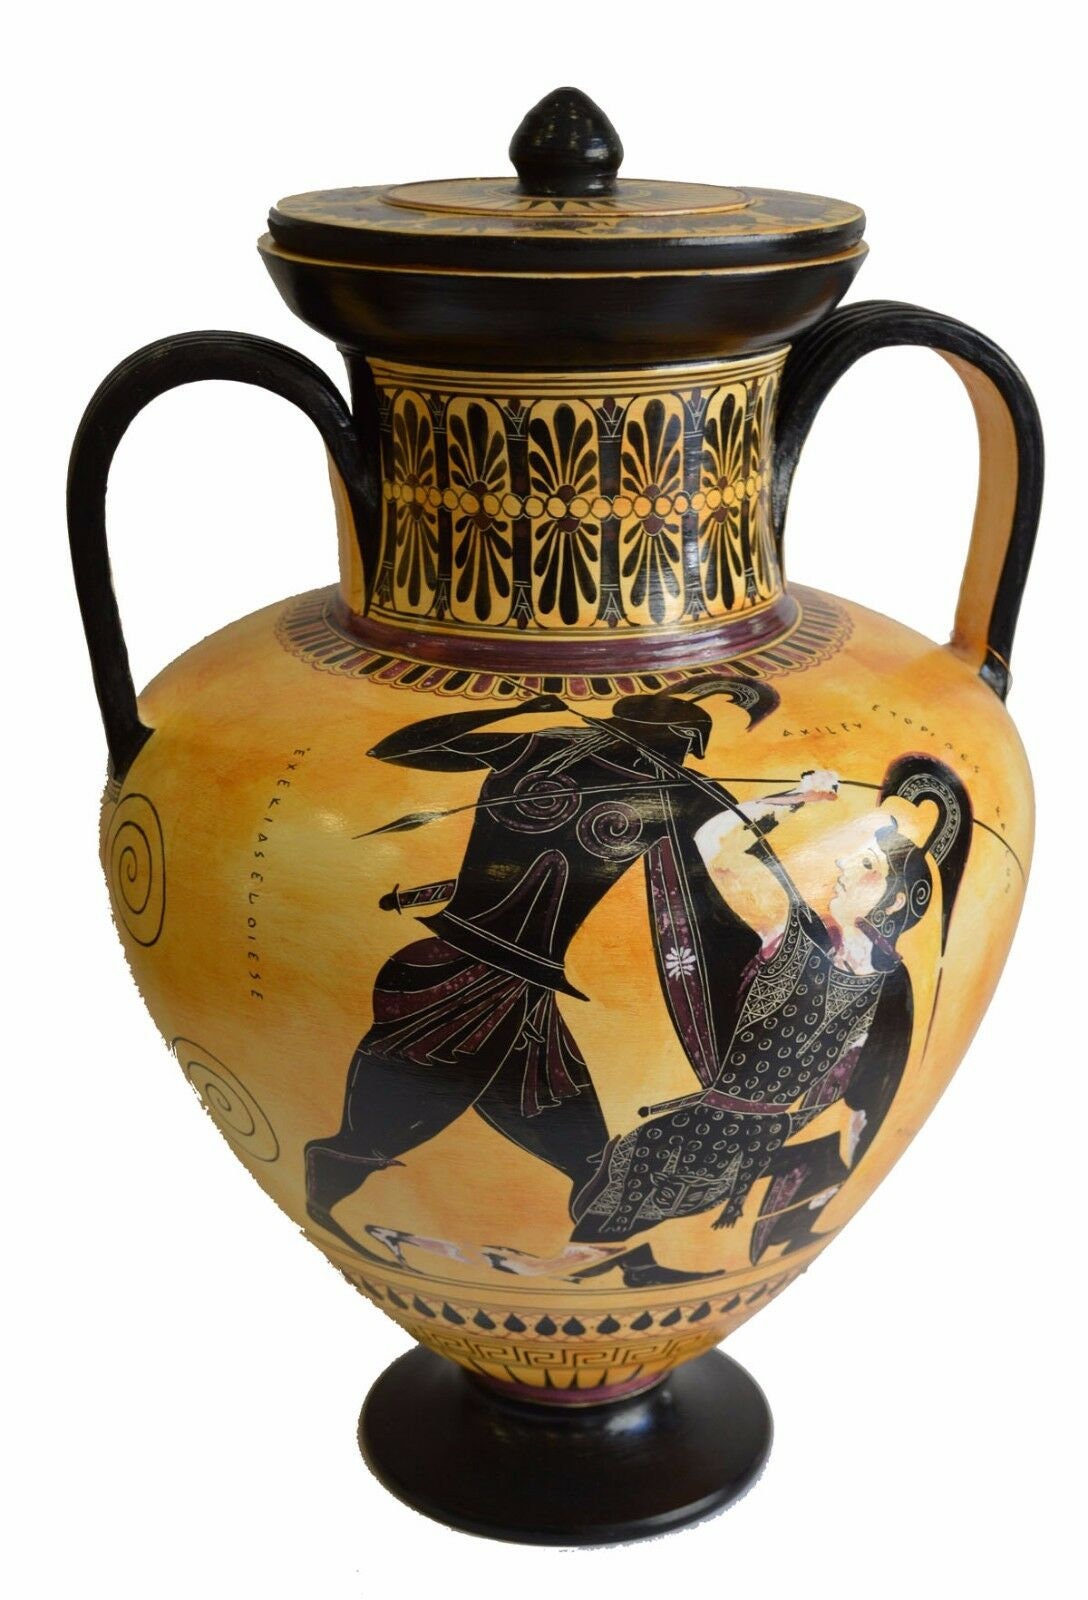 Achilles and Penthesileia, Amazonian Queen - Homer's Iliad - Dionysos, God of Wine - Amphora Vase - Exekias British Museum